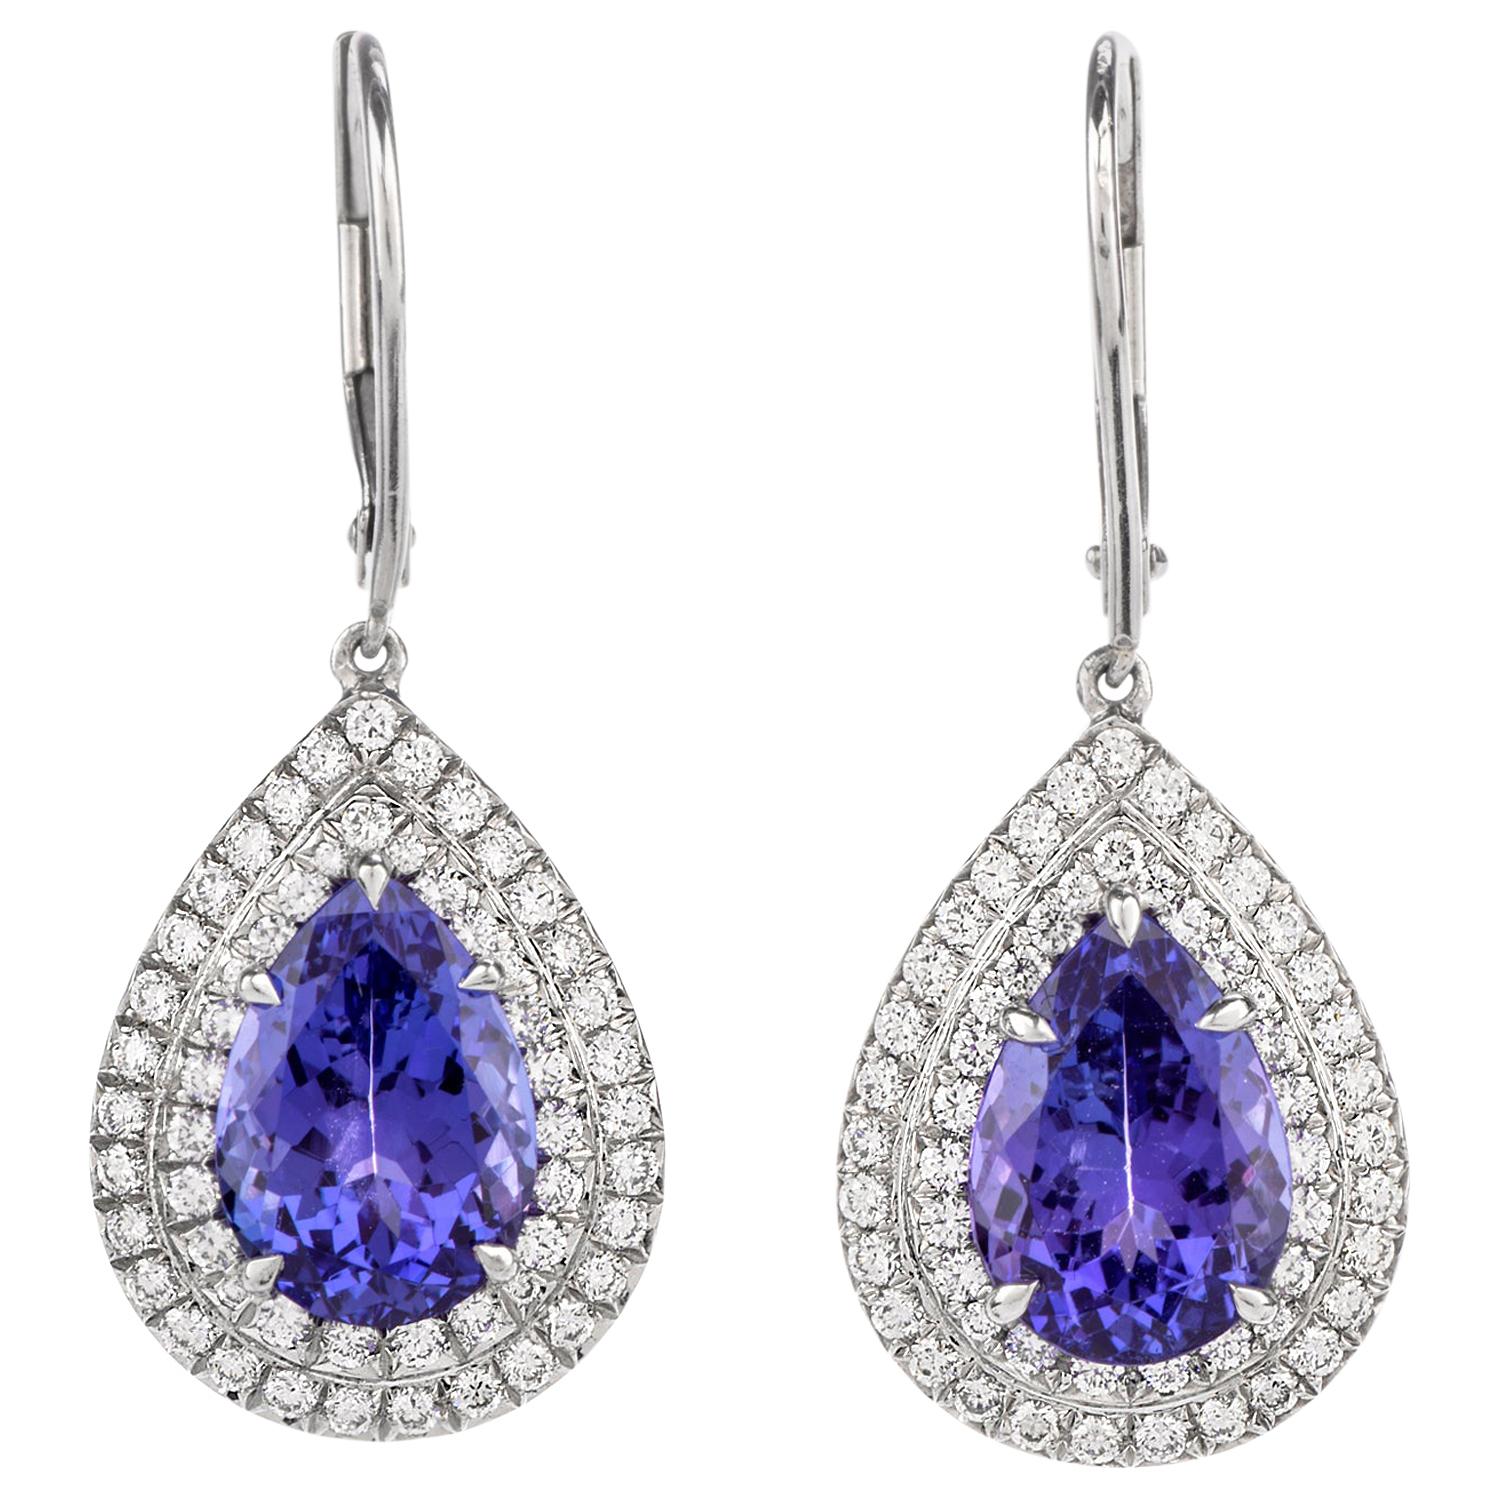 Tiffany & Co. Soleste Tanzanite Earrings in Platinum Dangle Double Halo